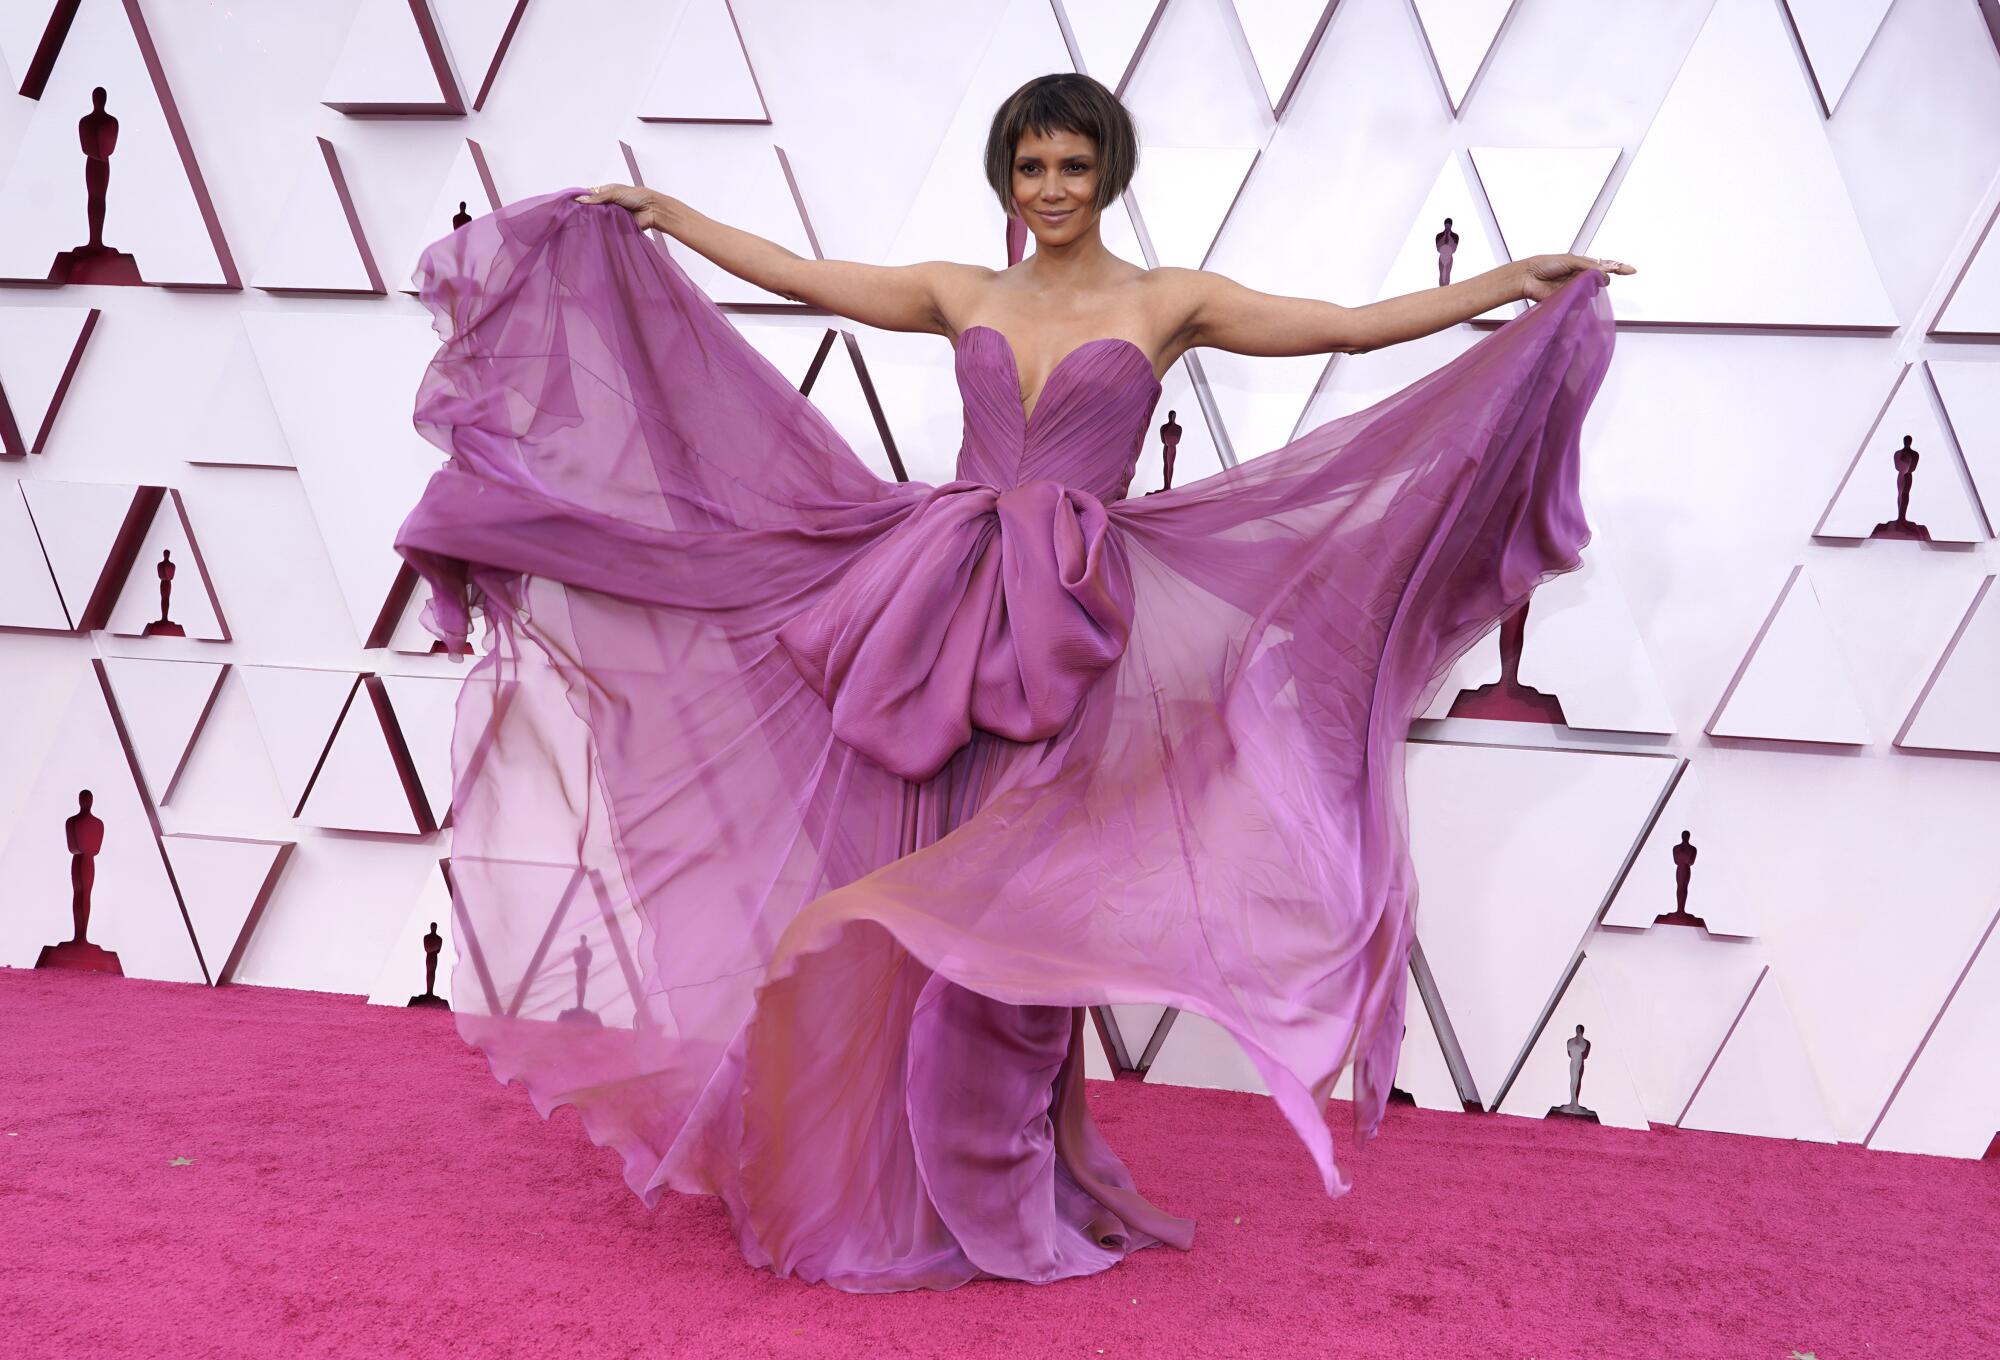 Regina King's Custom Louis Vuitton Dress at the 2021 Oscars